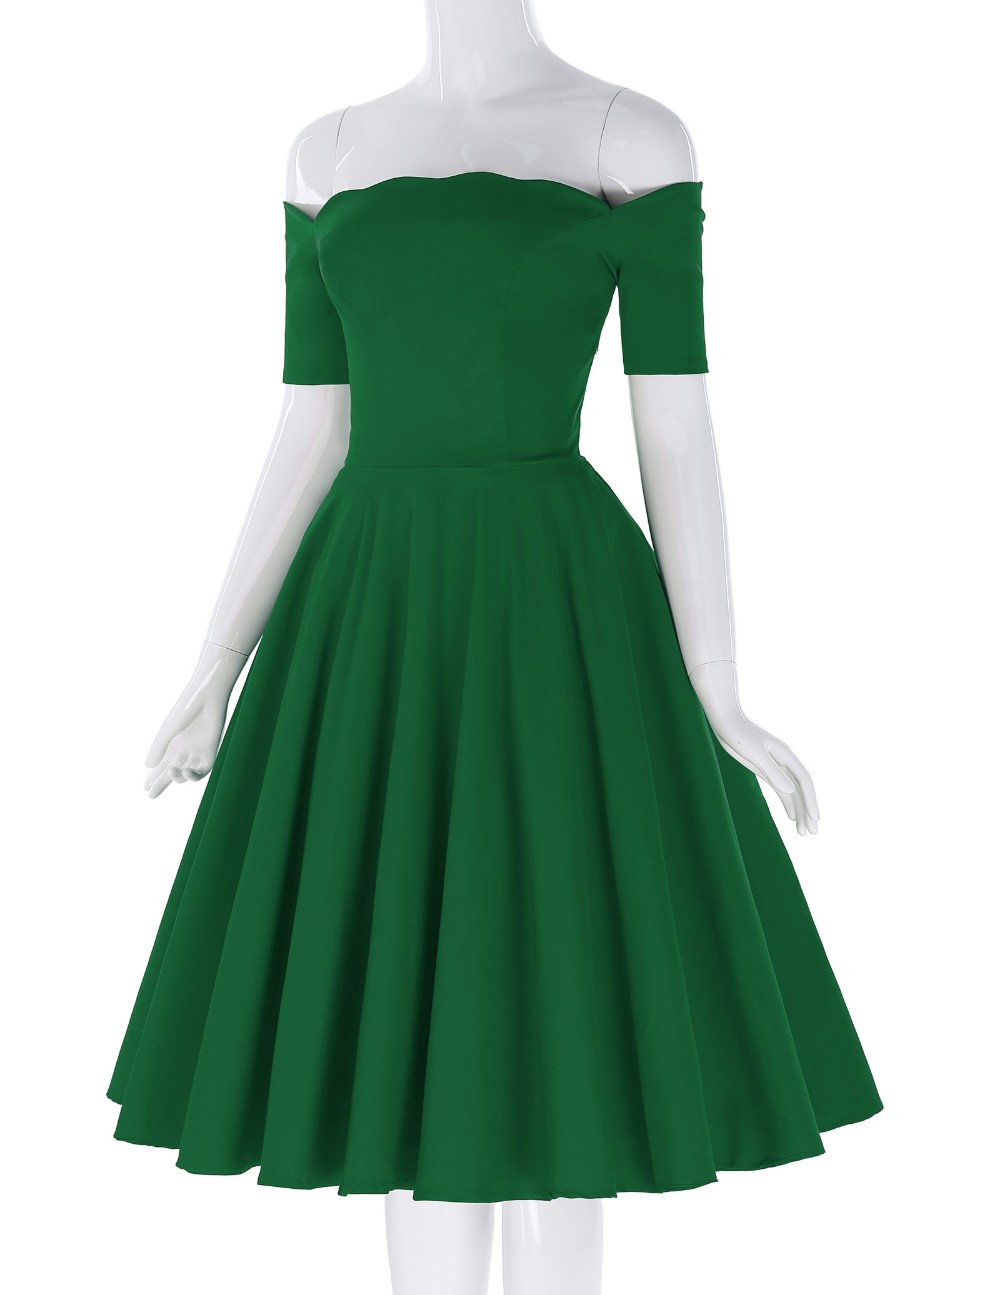 Sexy-Off-Shoulder-Dresses-Women-Red-Green-1950s-Vintage-Rockabilly-Dress-Audrey-Hepburn-Vestidos-Cas-32776812747